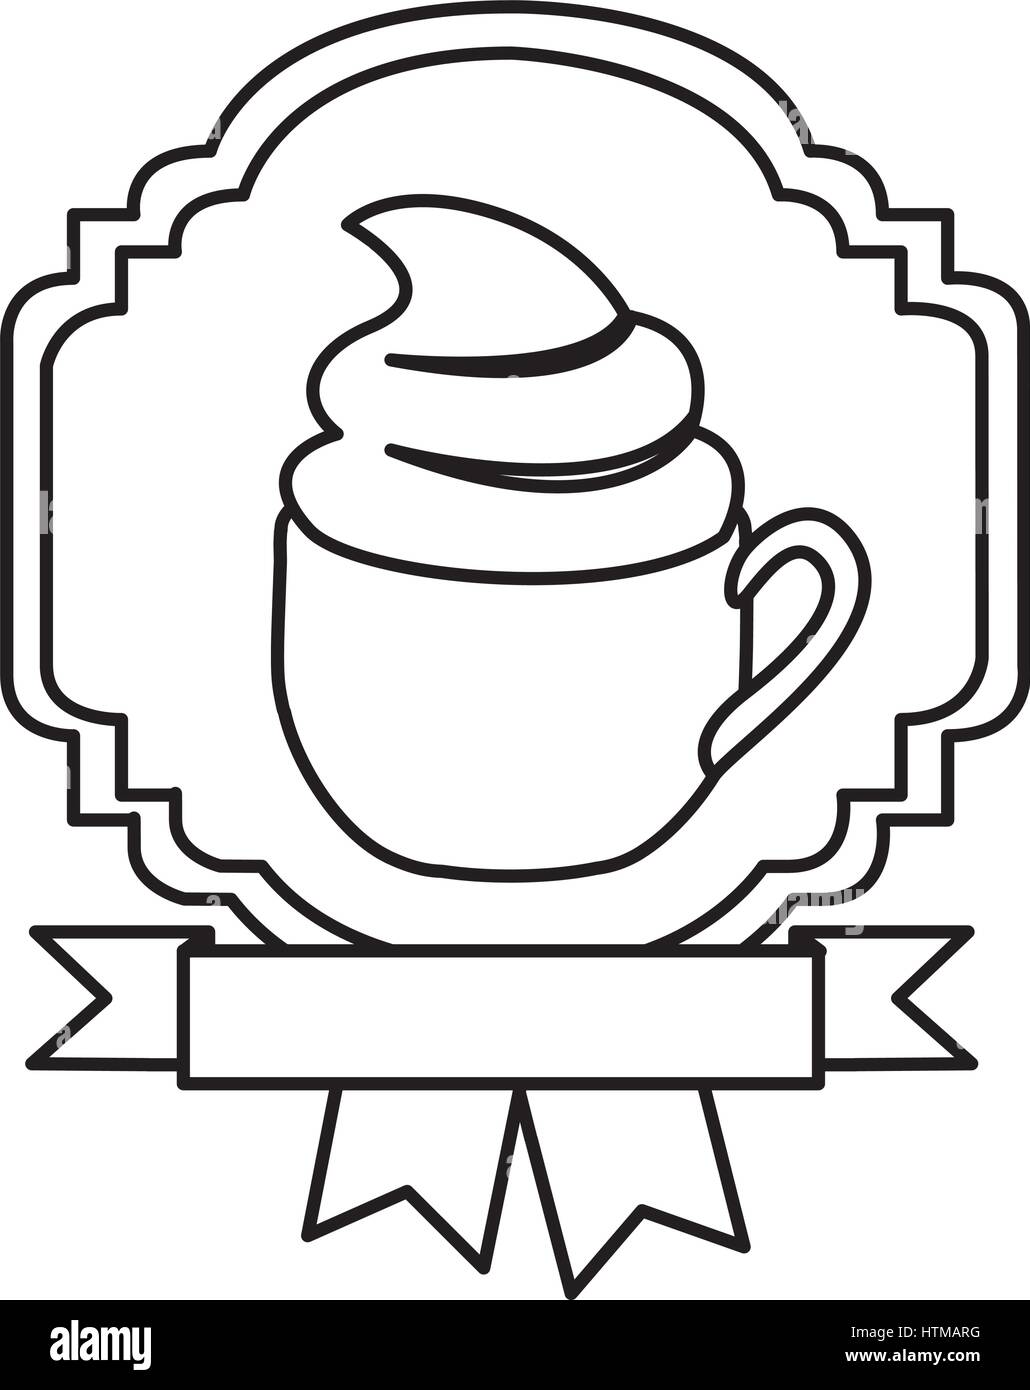 silhouette border heraldic decorative ribbon with cup of cappuccino with cream Stock Vector